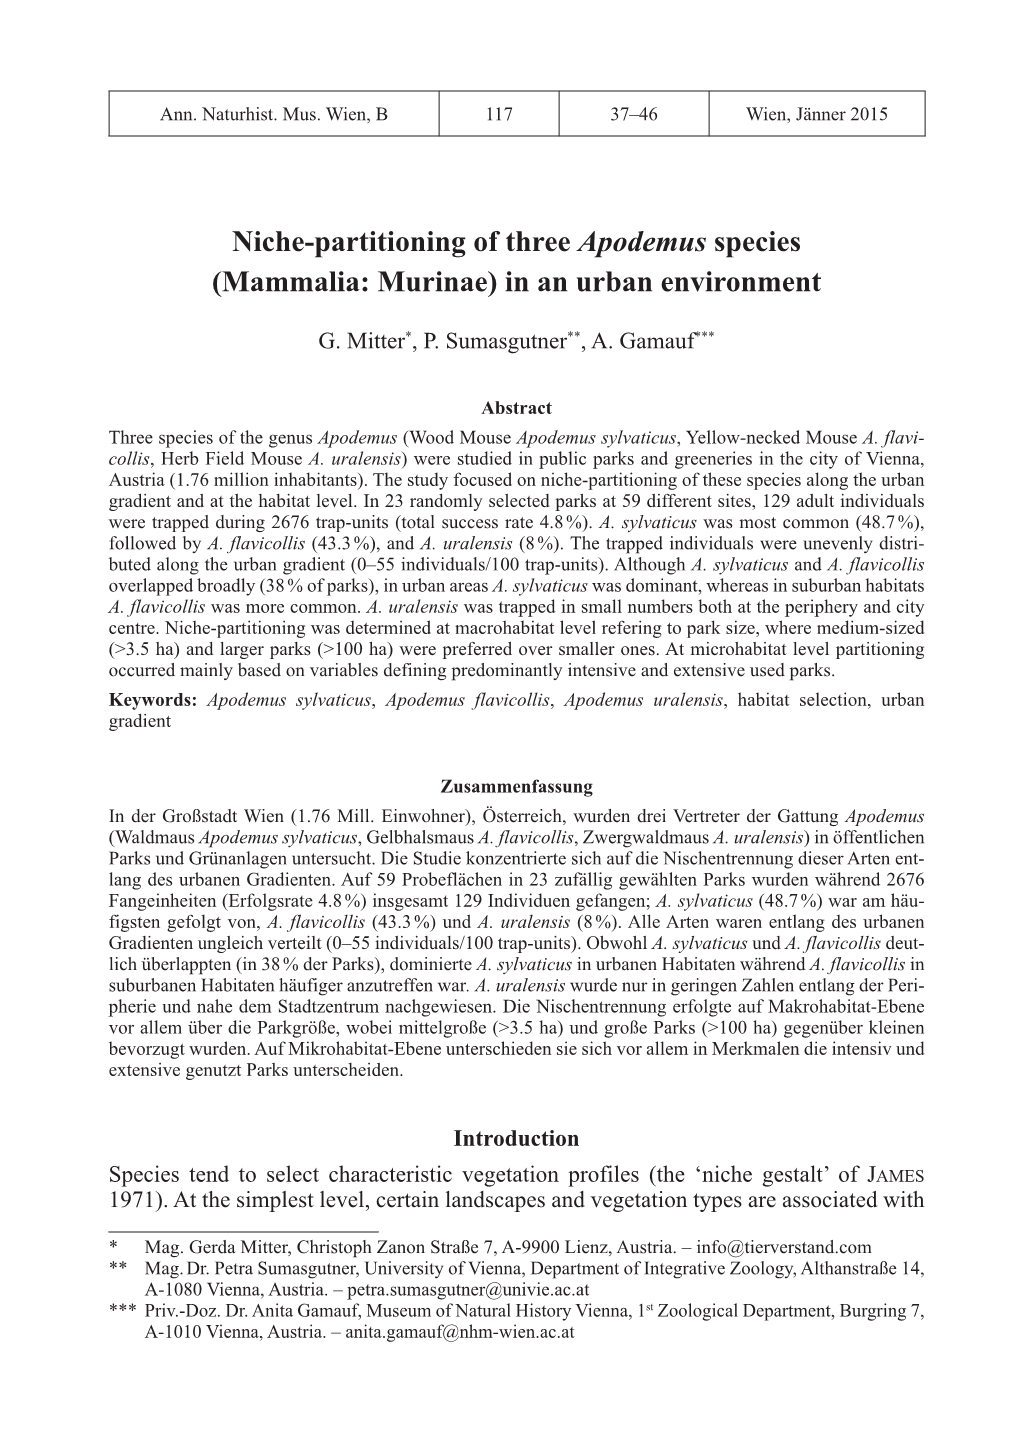 Niche-Partitioning of Three Apodemus Species (Mammalia: Murinae) in an Urban Environment